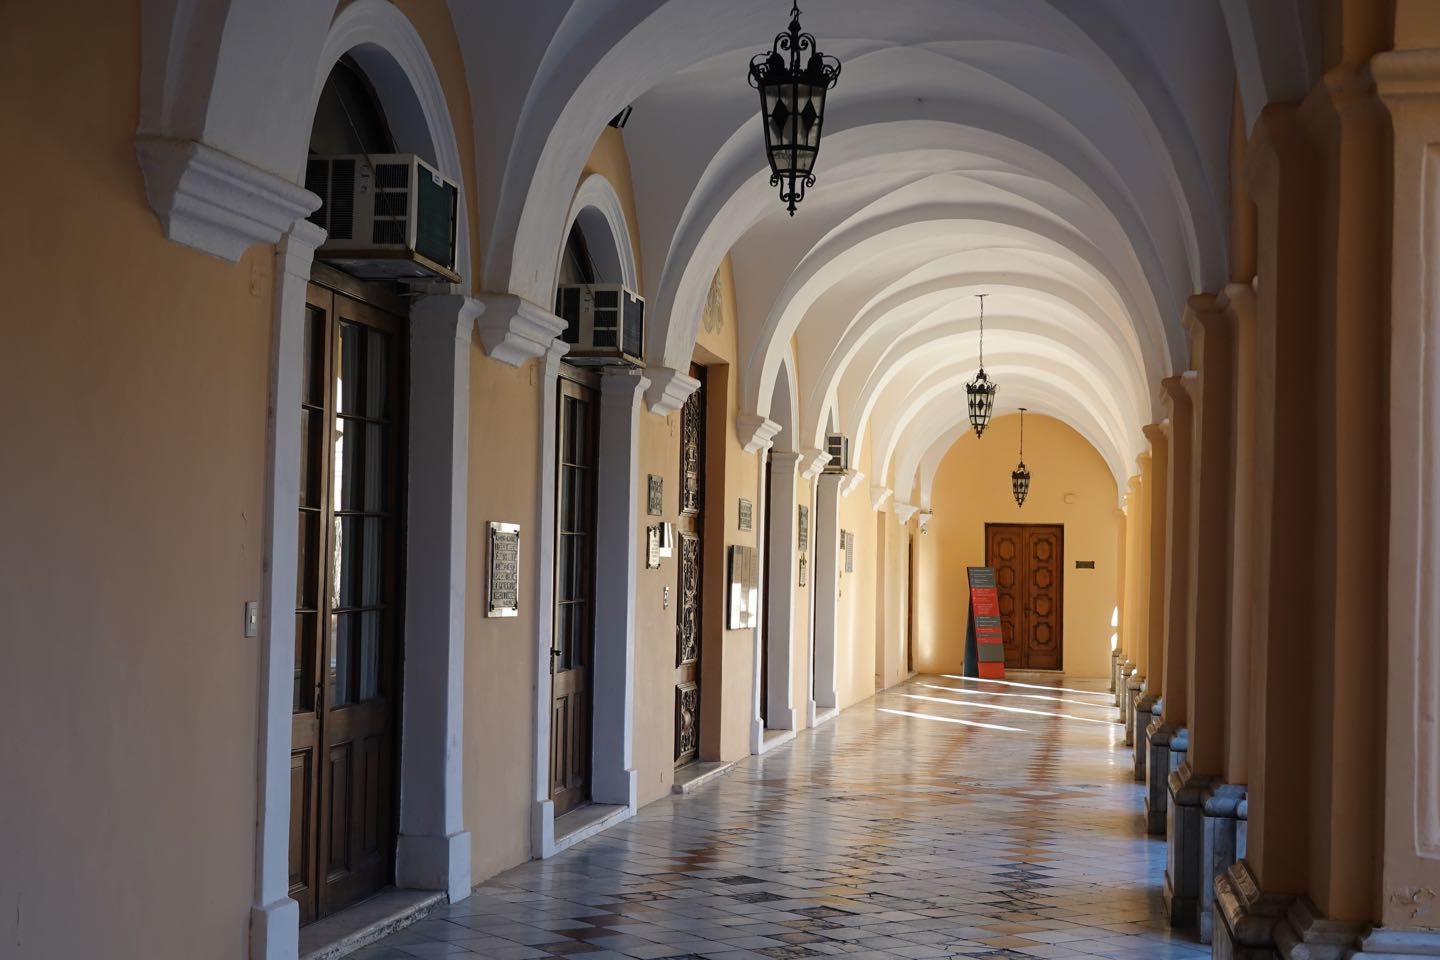 Hall of the National University of Cordoba